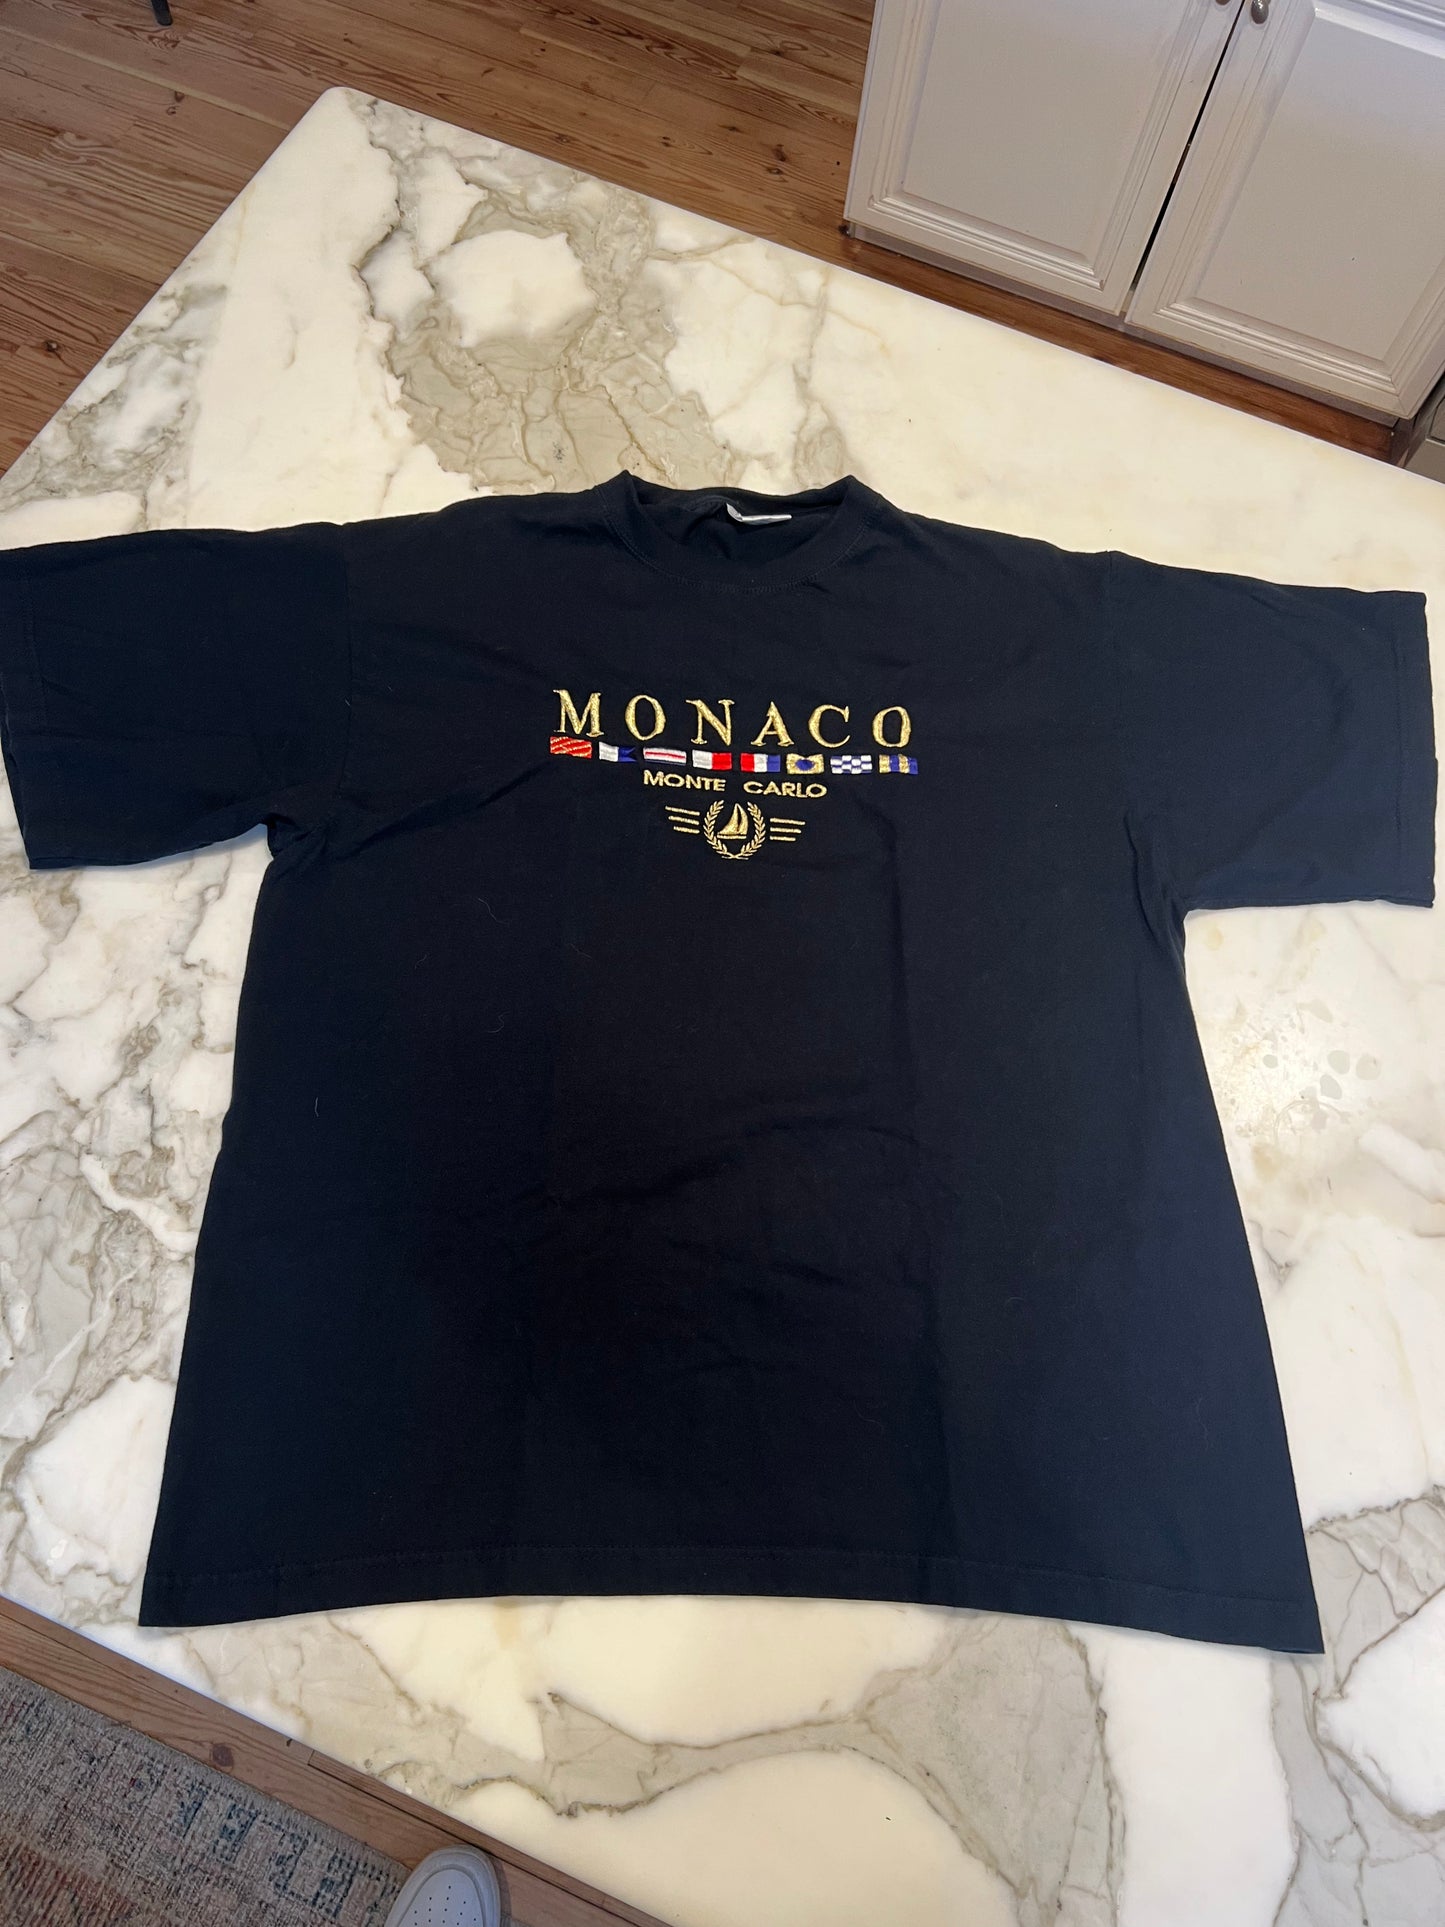 Vintage Monaco Monte Carlo Shirt